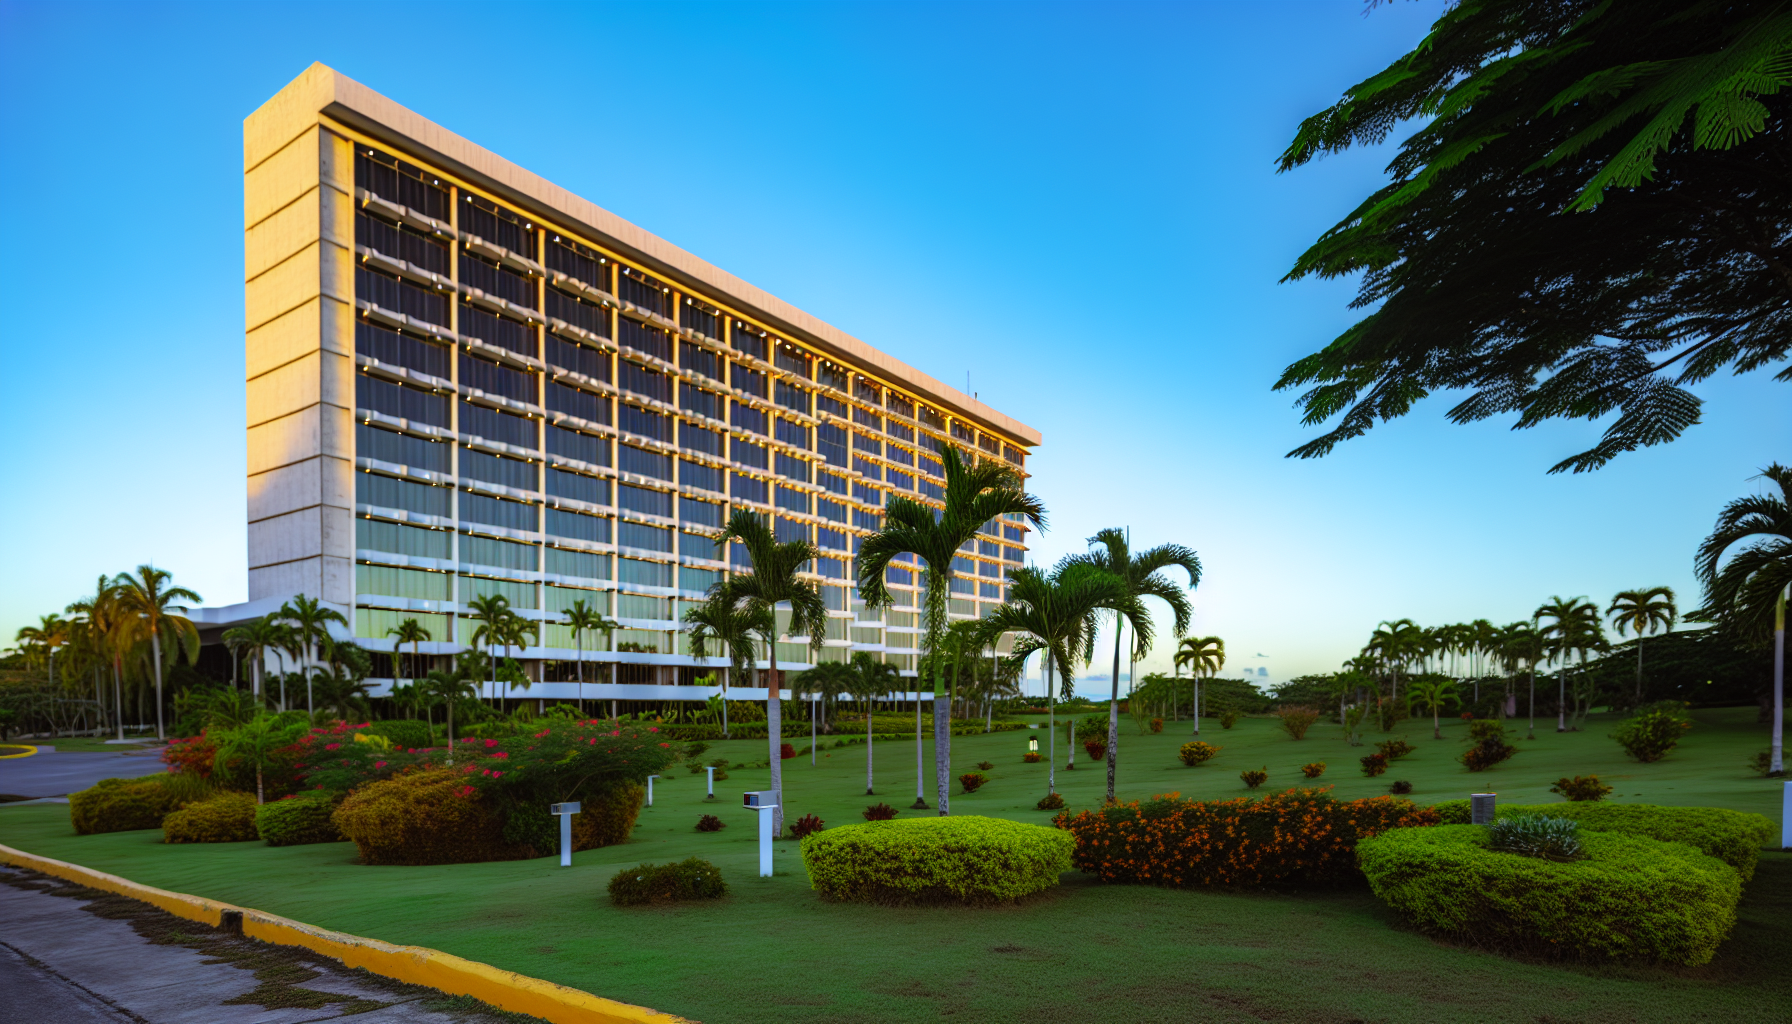 Exterior of a hotel near Juan Santamaría International Airport with lush landscaping